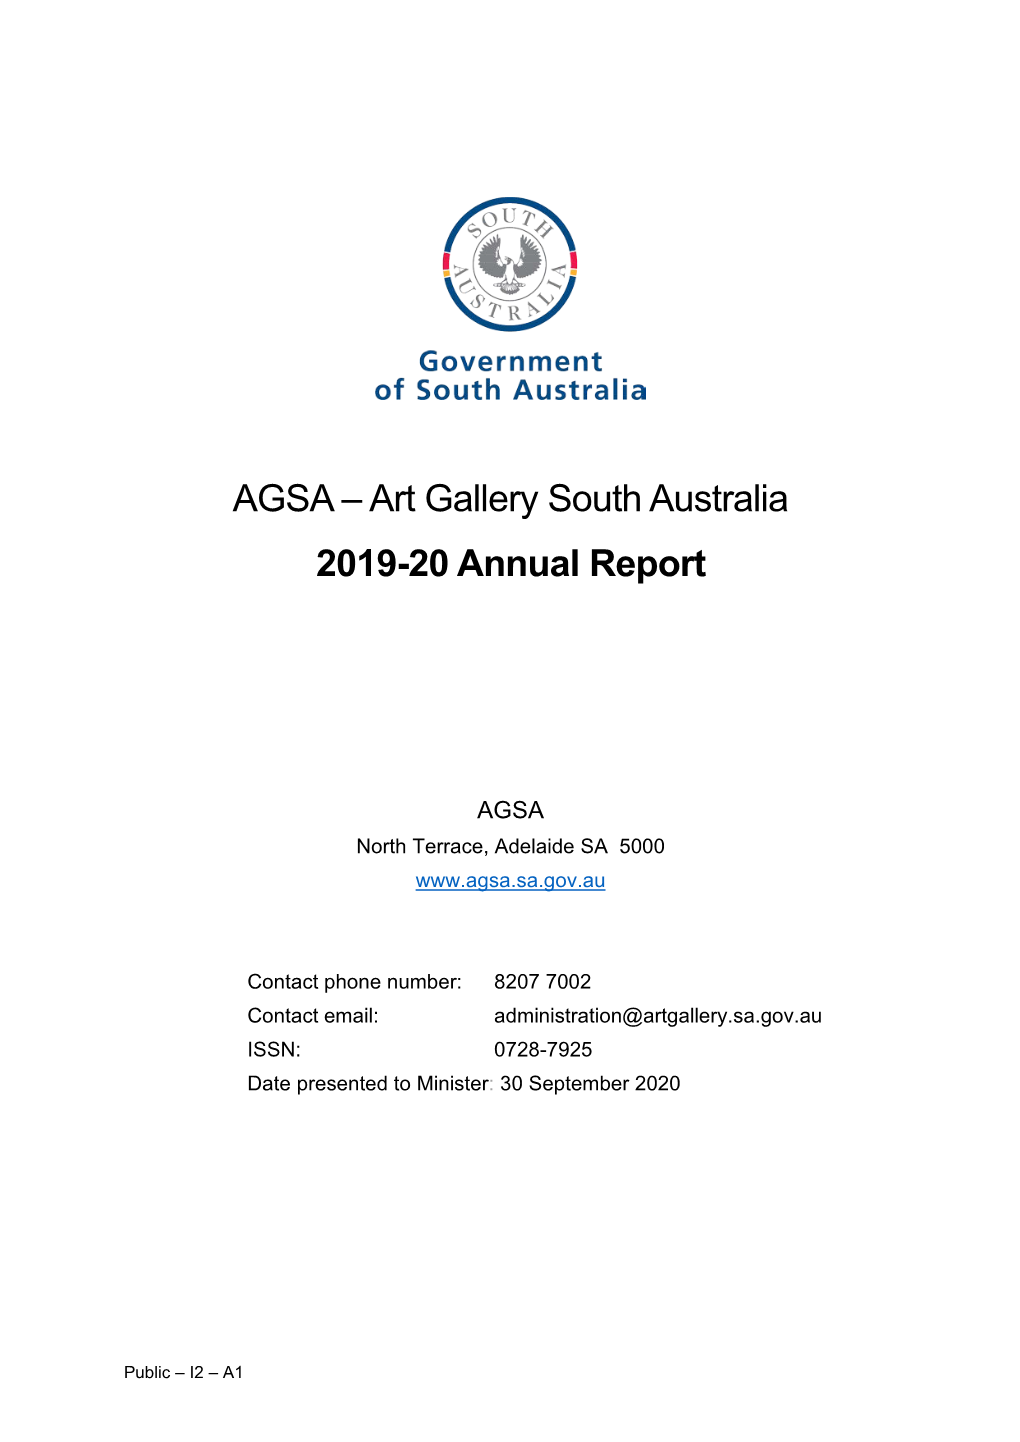 AGSA – Art Gallery South Australia 2019-20 Annual Report